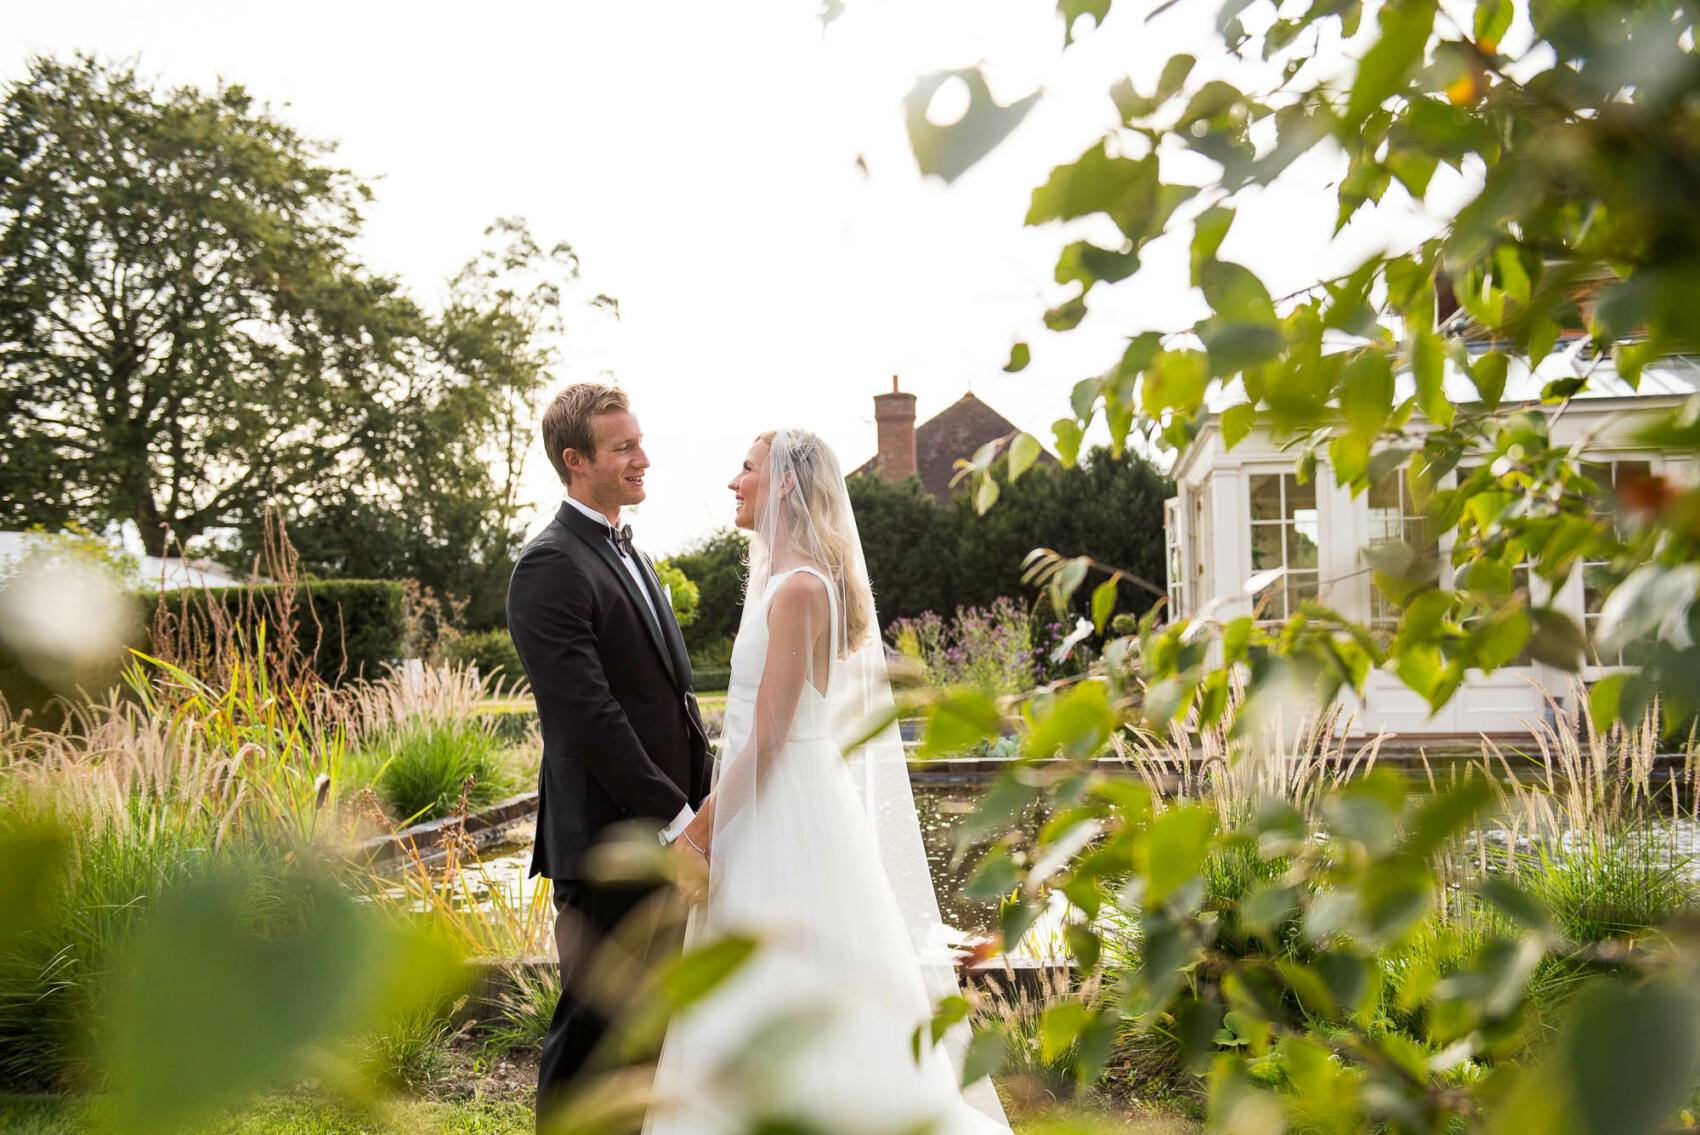 Jessica Grace Photography - LGBTQ+ friendly wedding photographer in Surrey